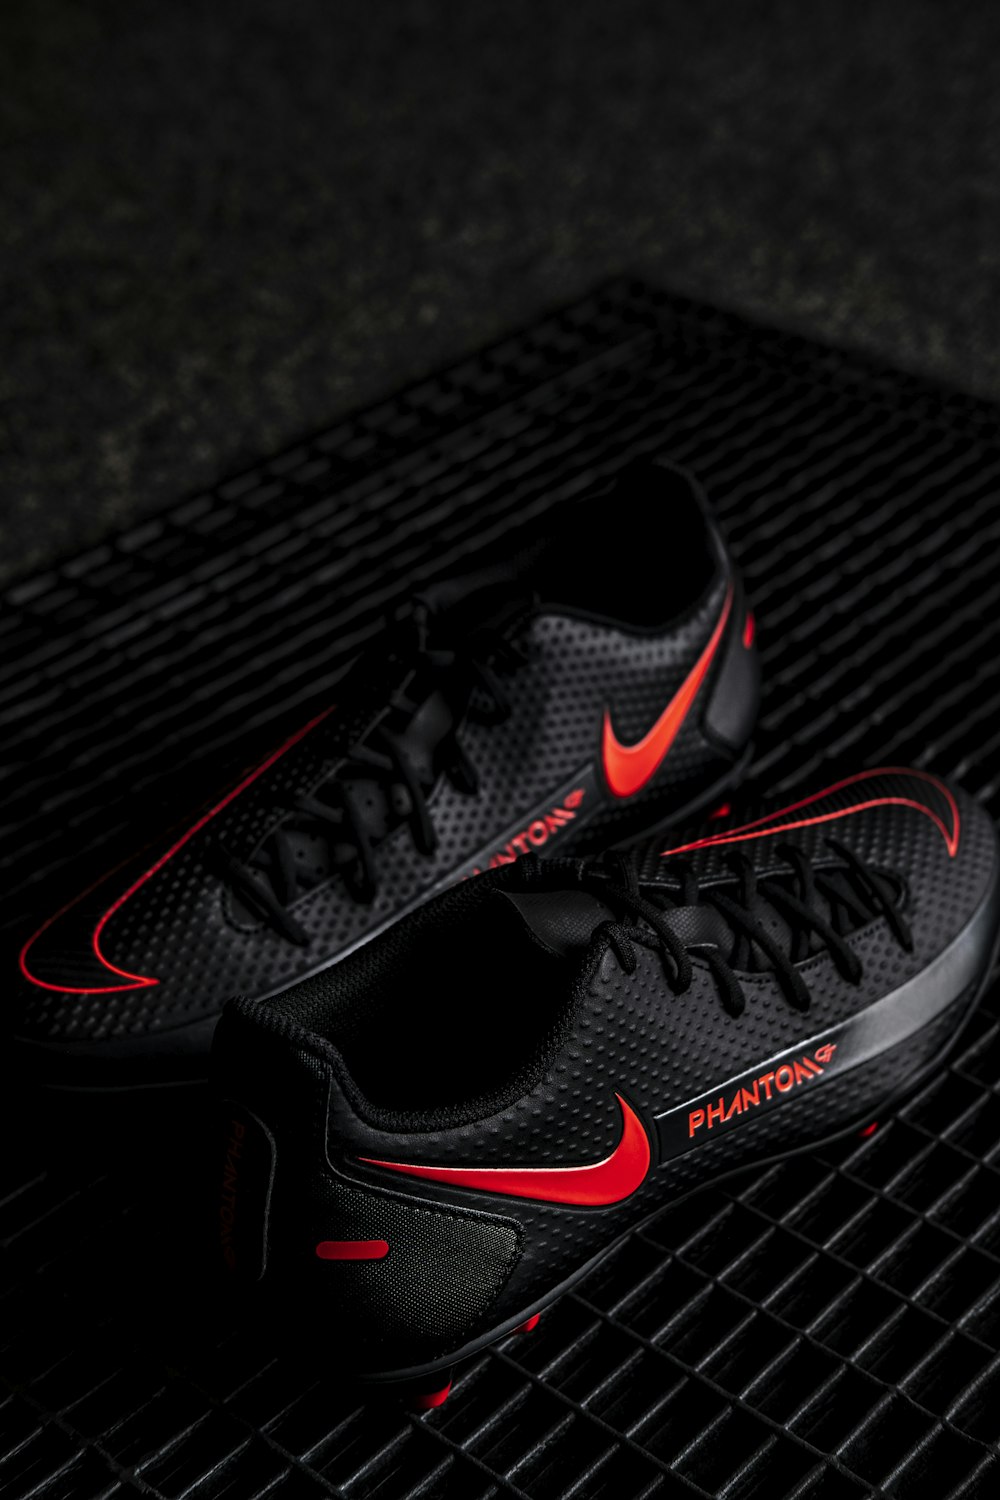 Foto tenis nike negros y rojos – Imagen Nike fantasma gratis en Unsplash